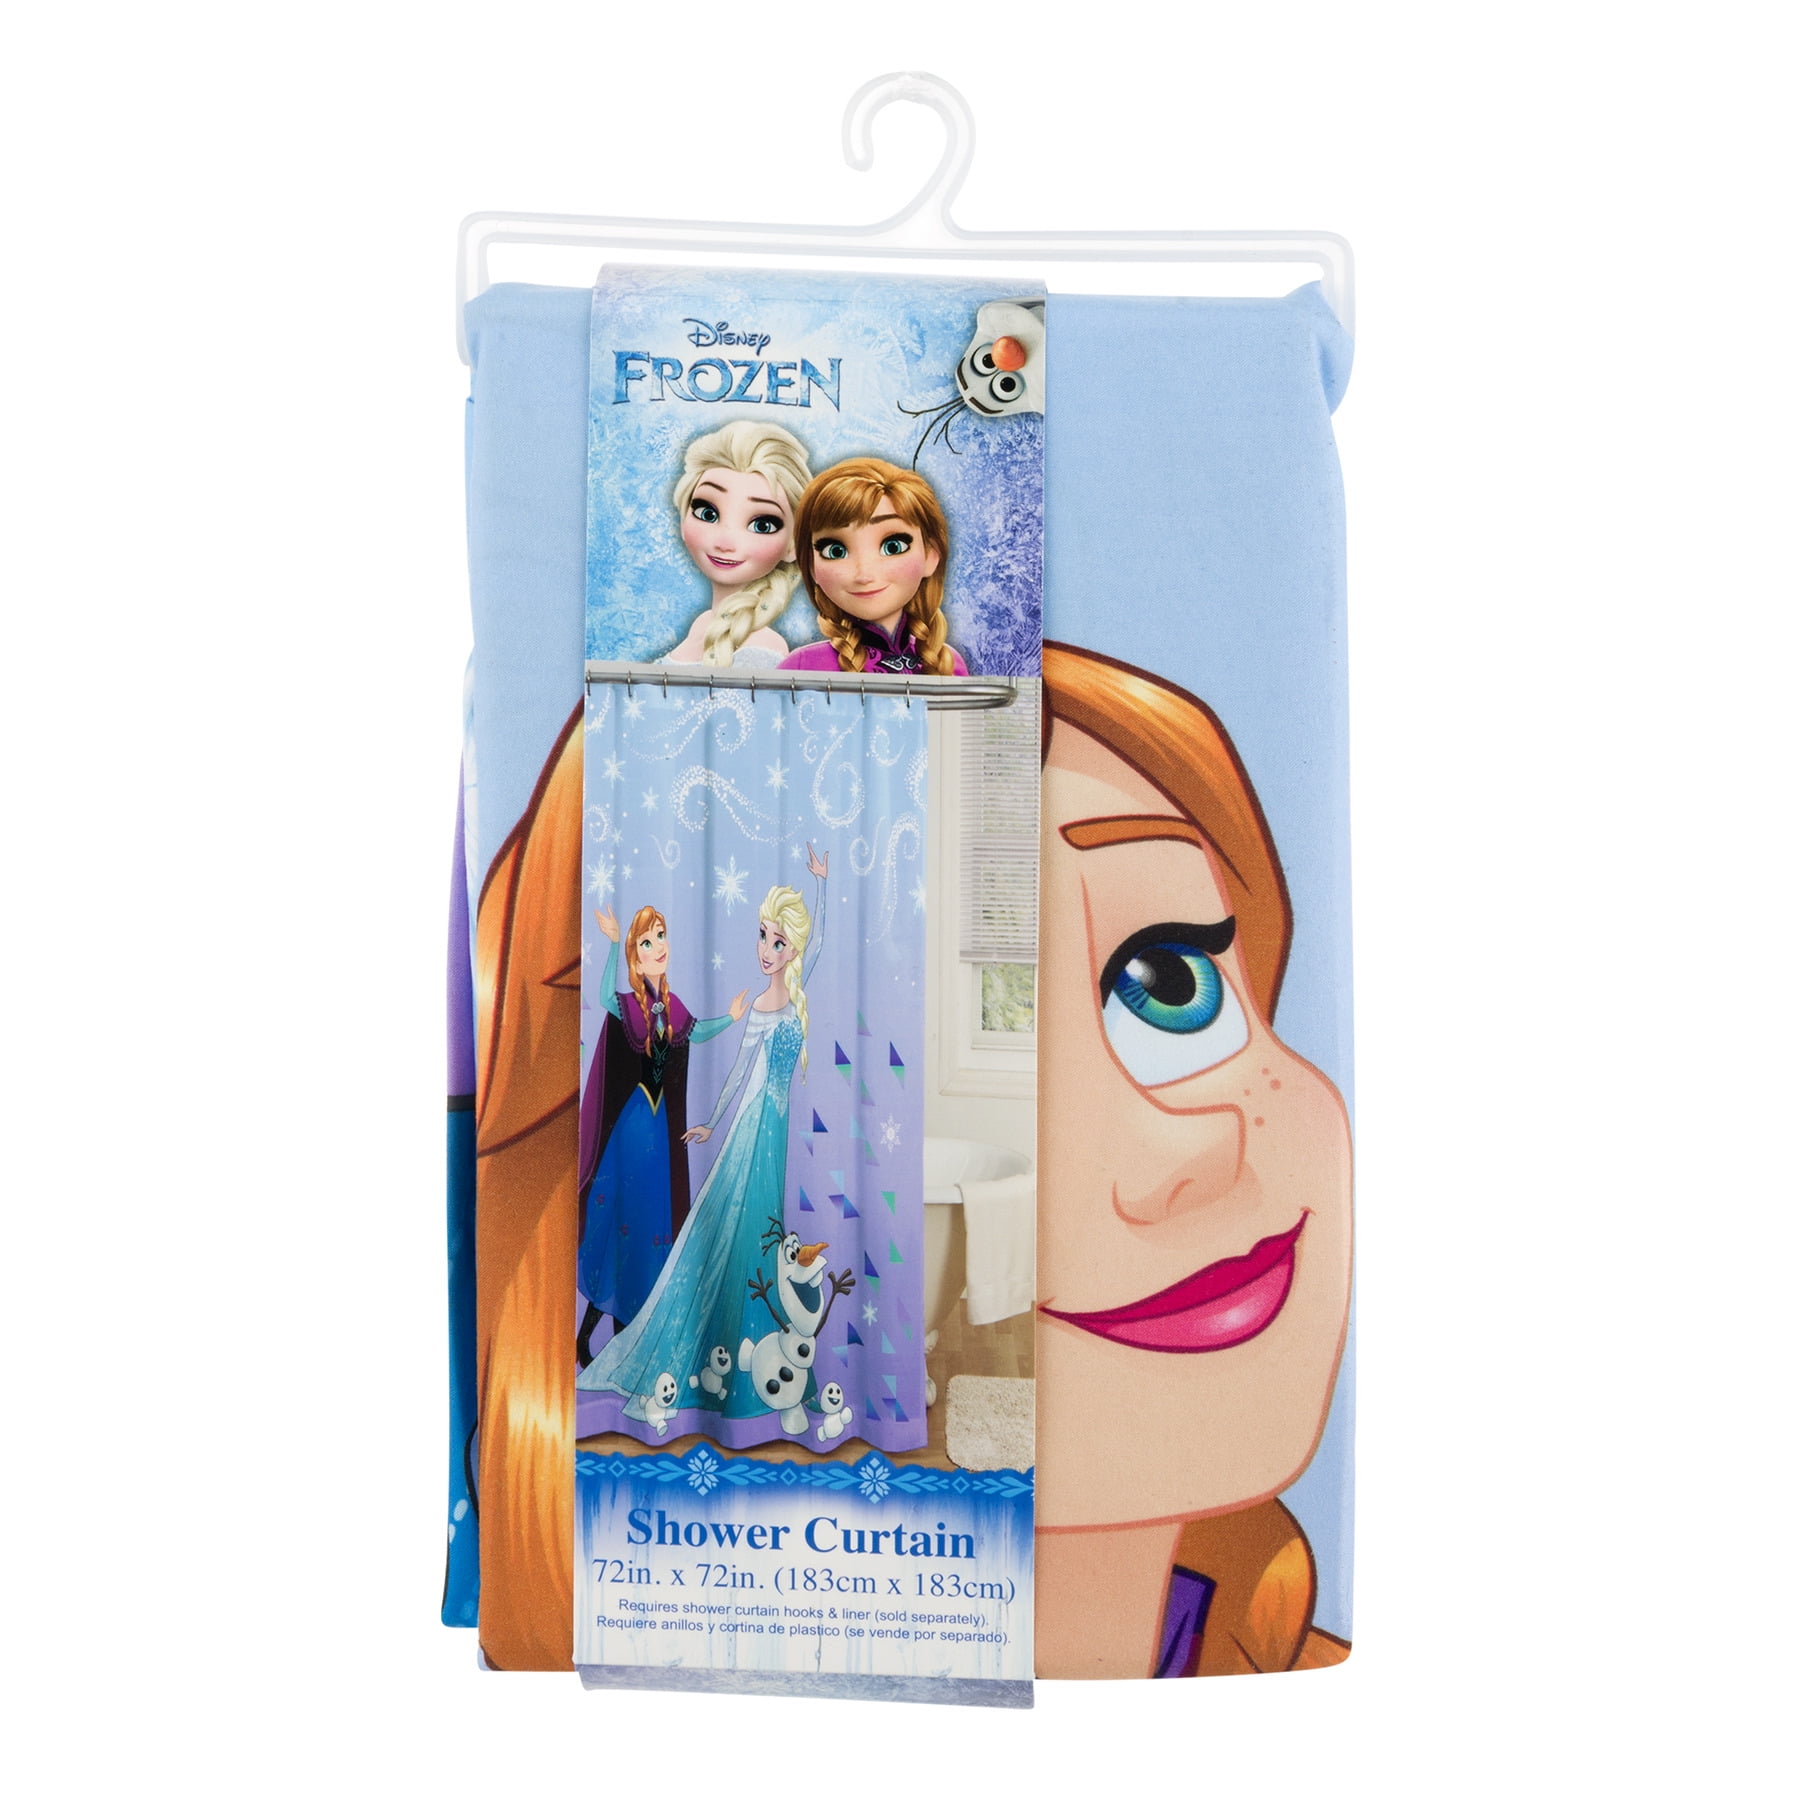 New Disney Frozen Fabric Shower Curtain Elsa Anna Olaf 72" x 72" 100% Polyester 